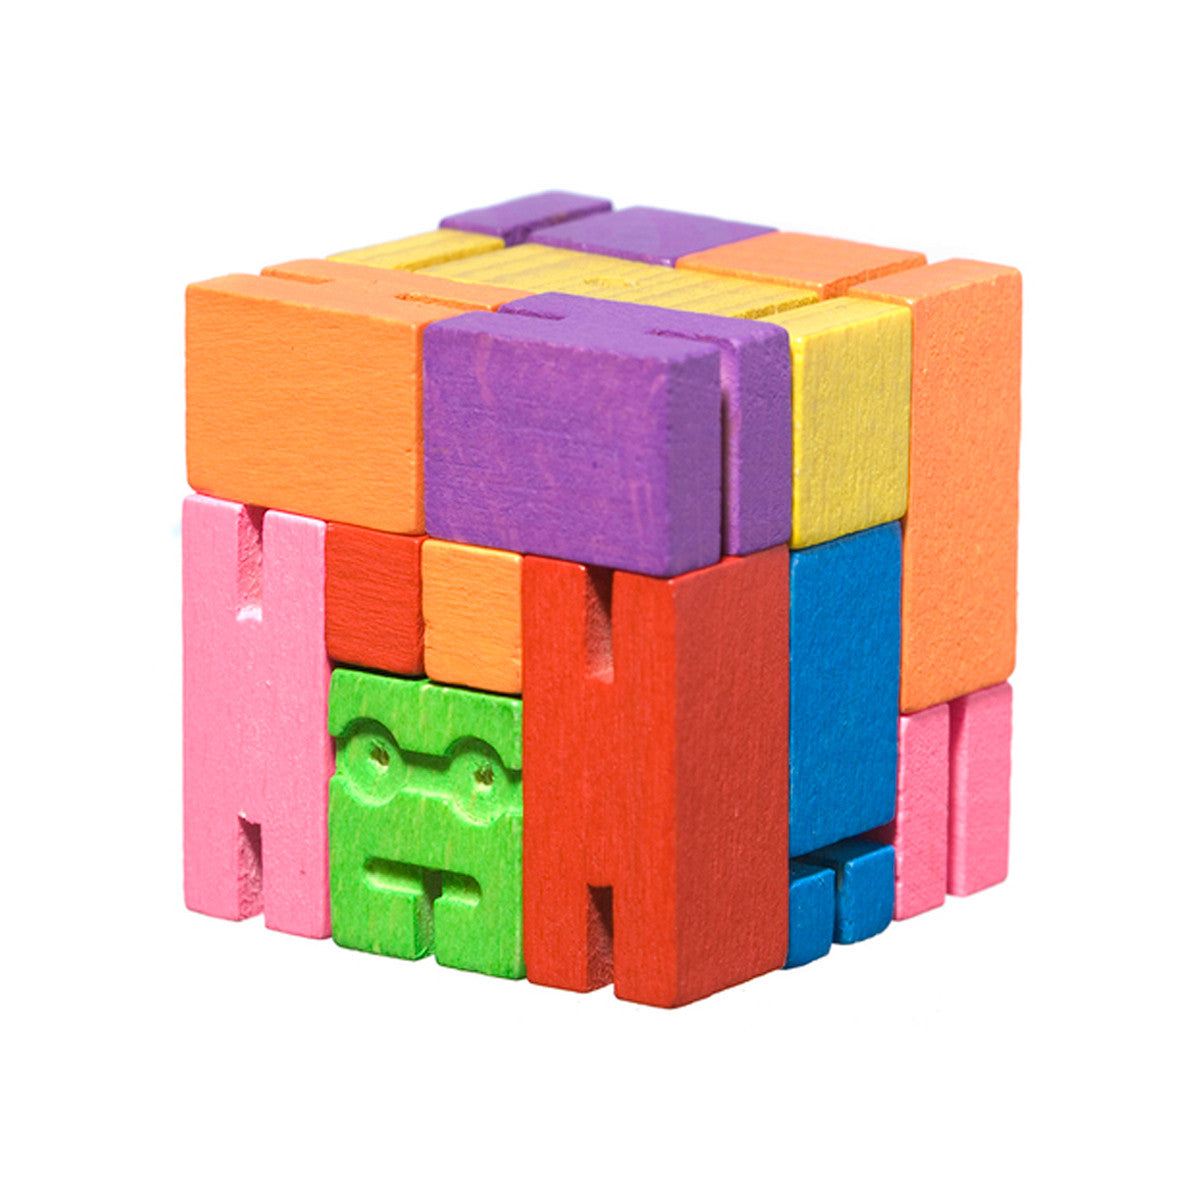 Multi Cubebot - Small